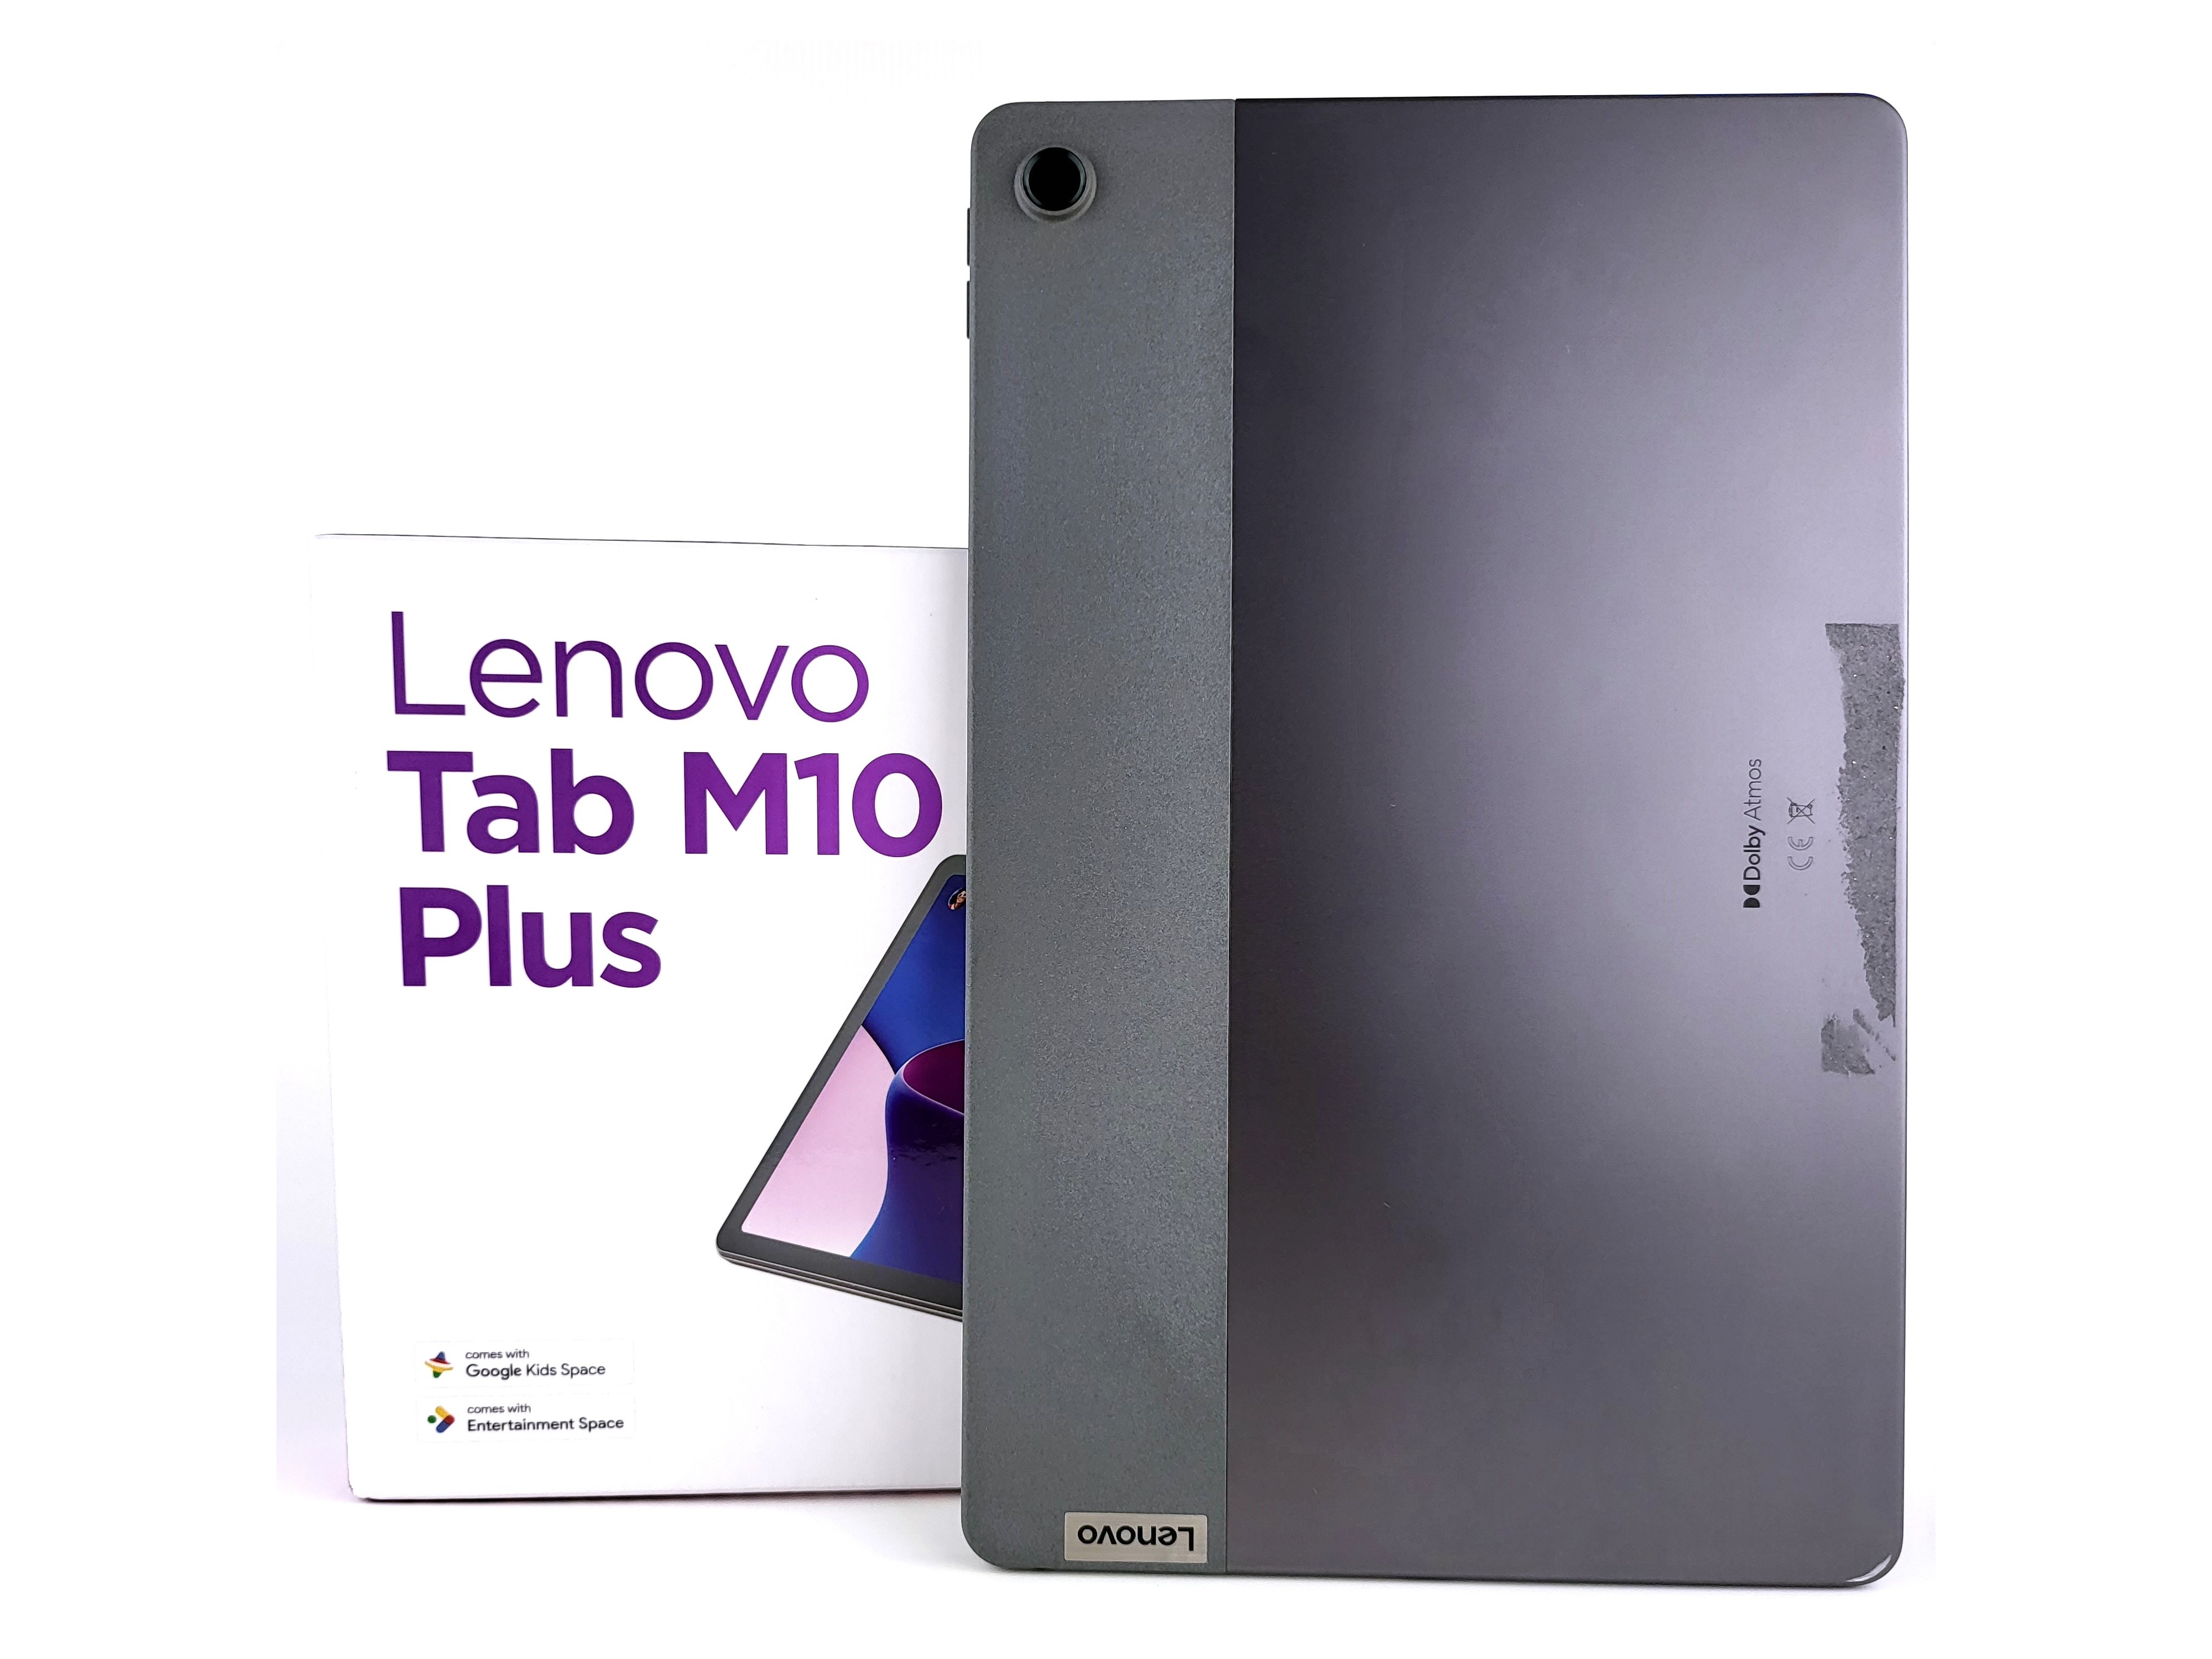 Lenovo Tab M10 Plus (Gen 3) Review - Reviewed